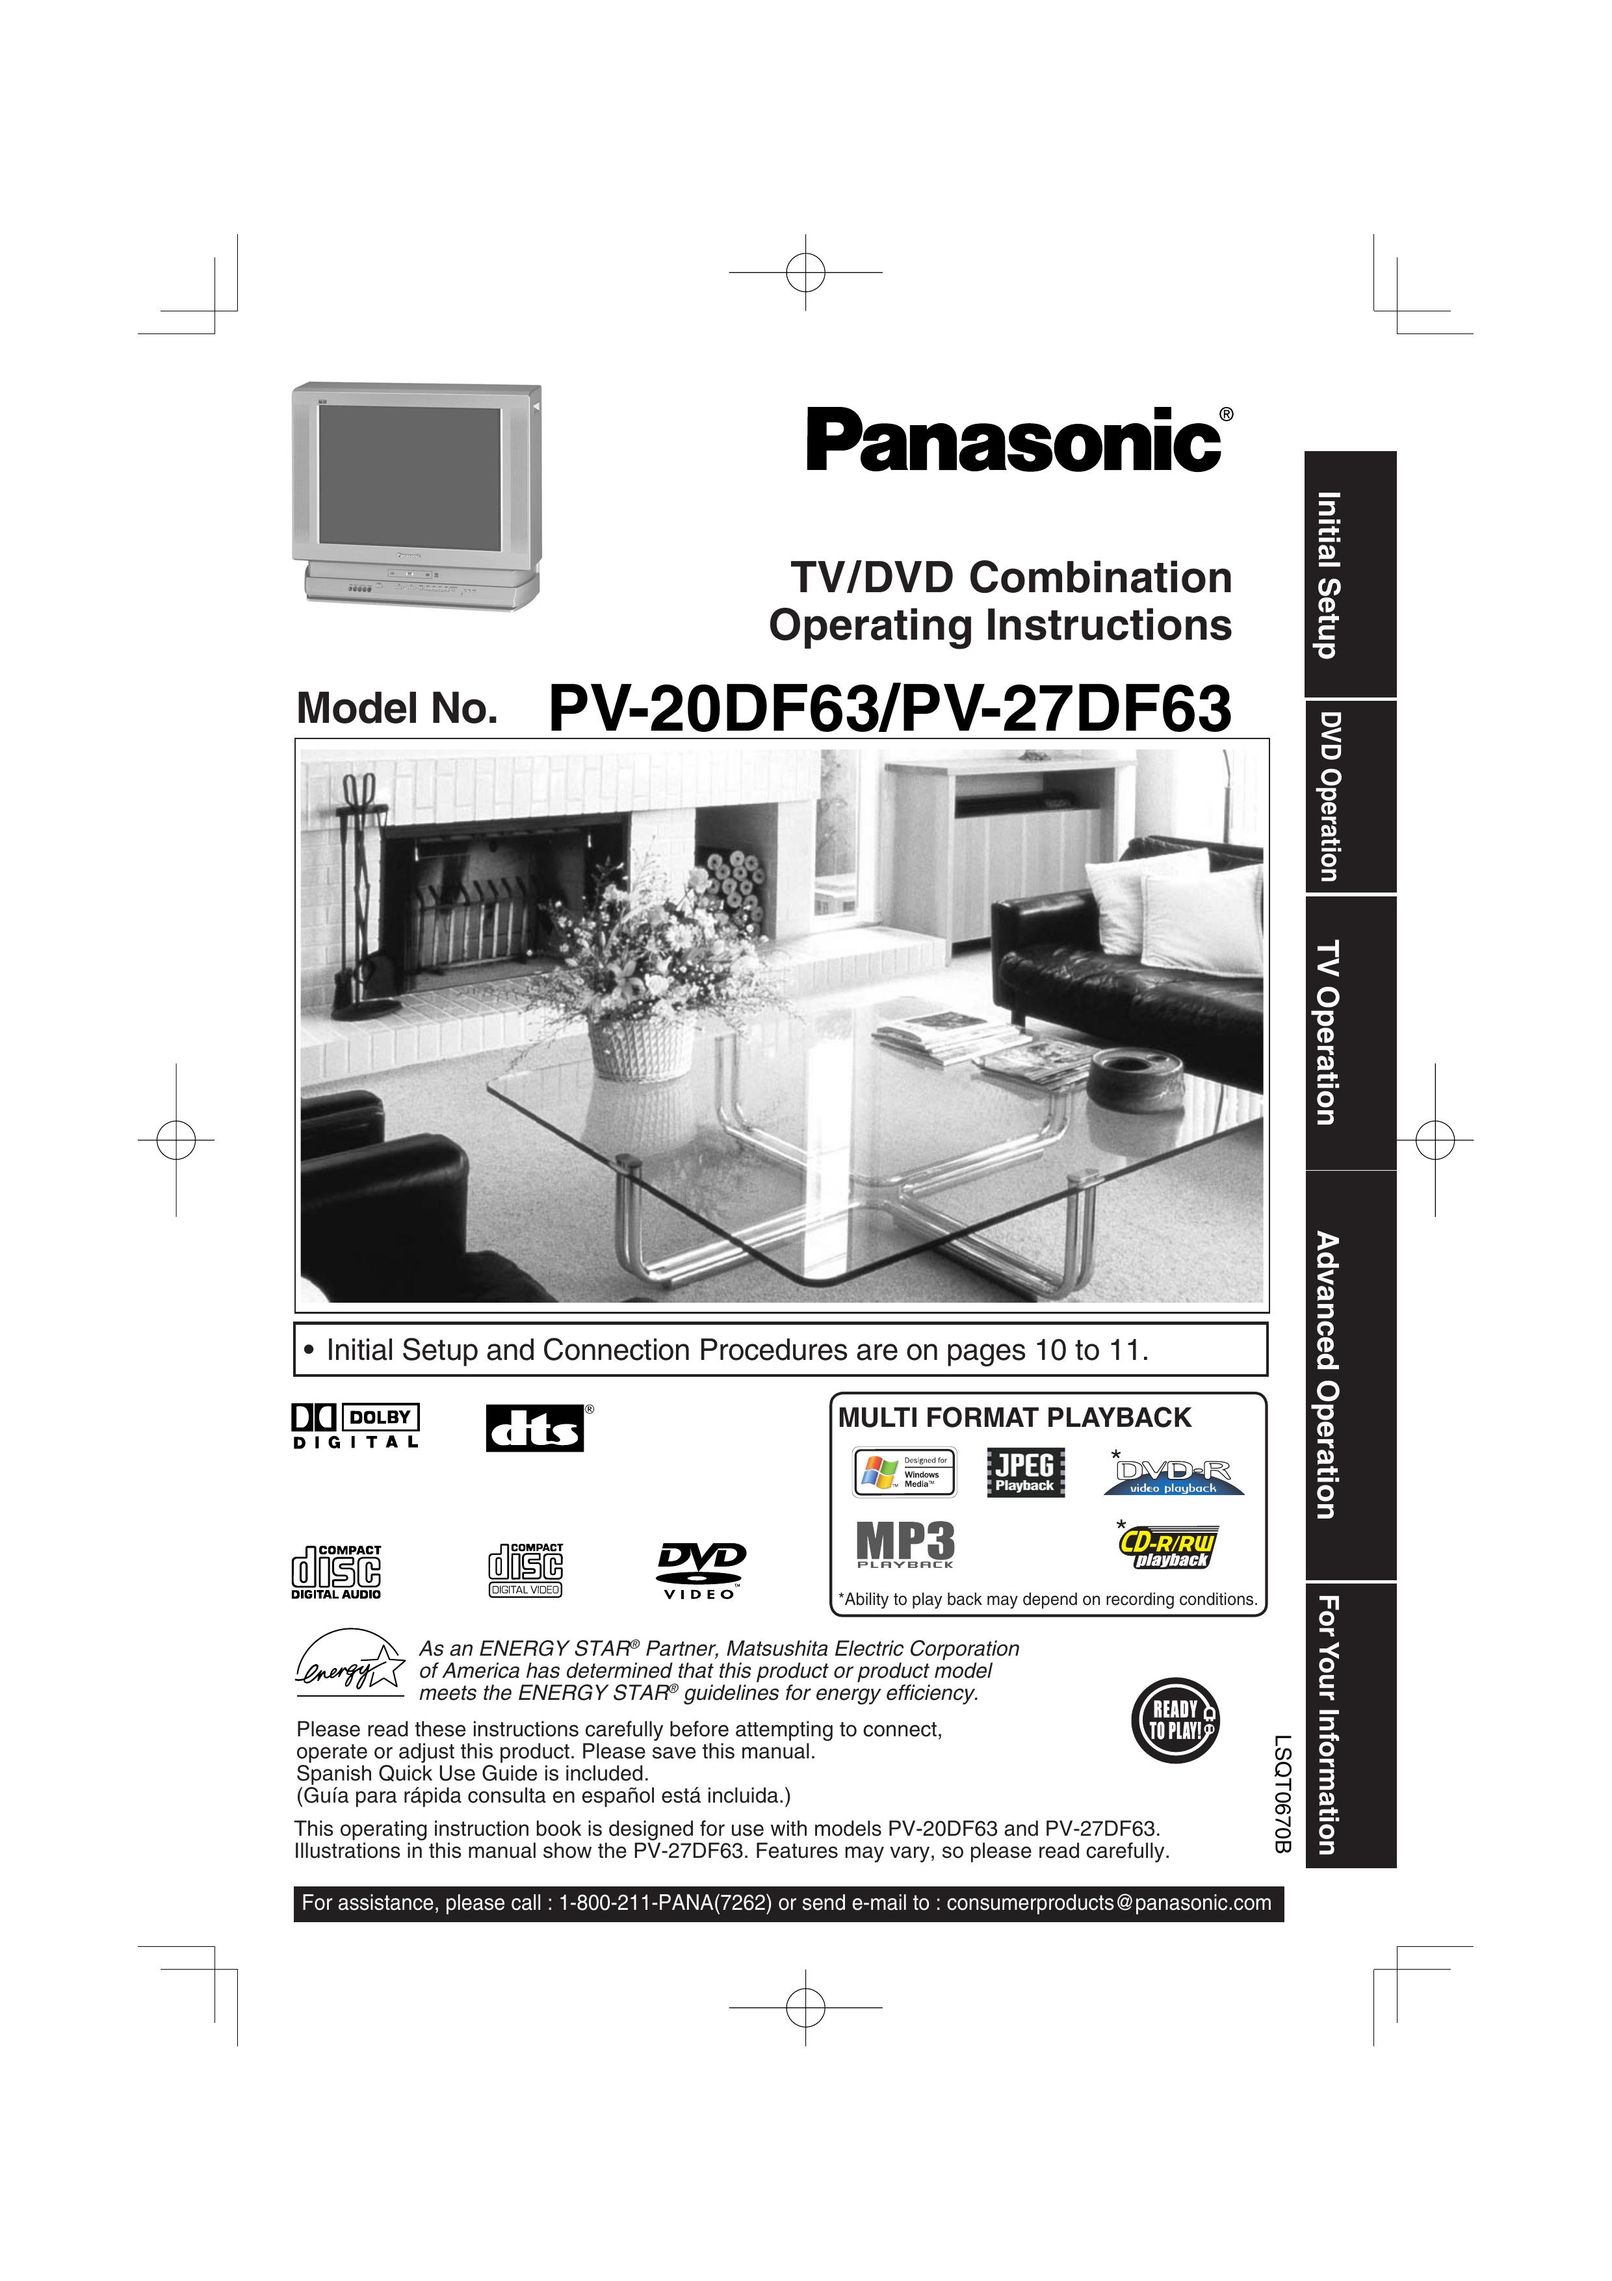 Panasonic PV 27DF63 TV DVD Combo User Manual